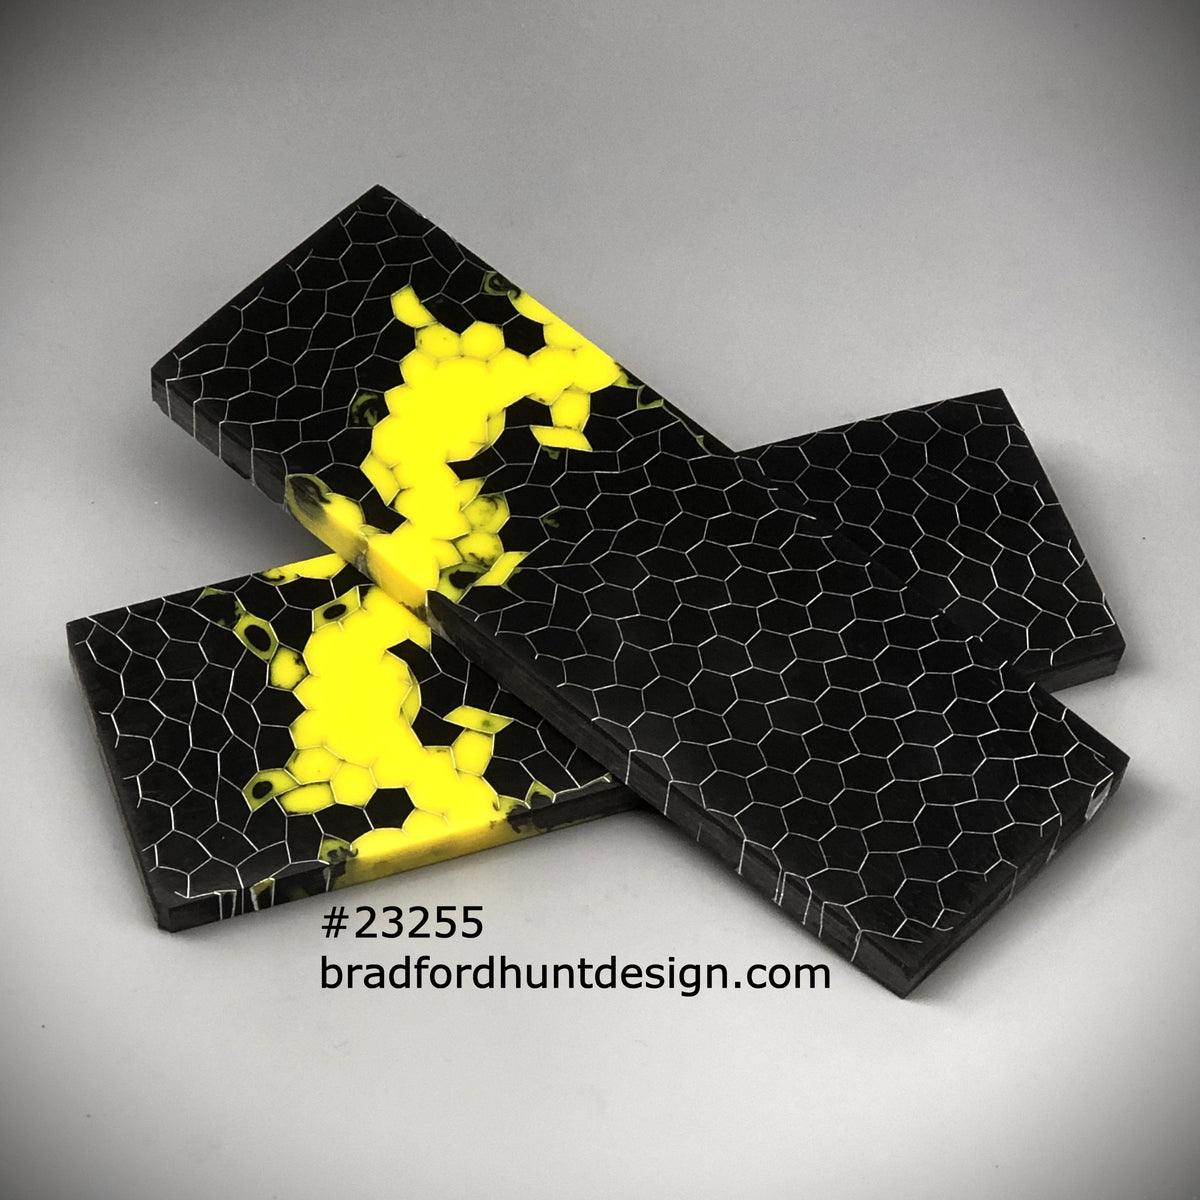 Aluminum Honeycomb and Urethane Resin Custom Knife Scales #22252 – Bradford  Hunt Design